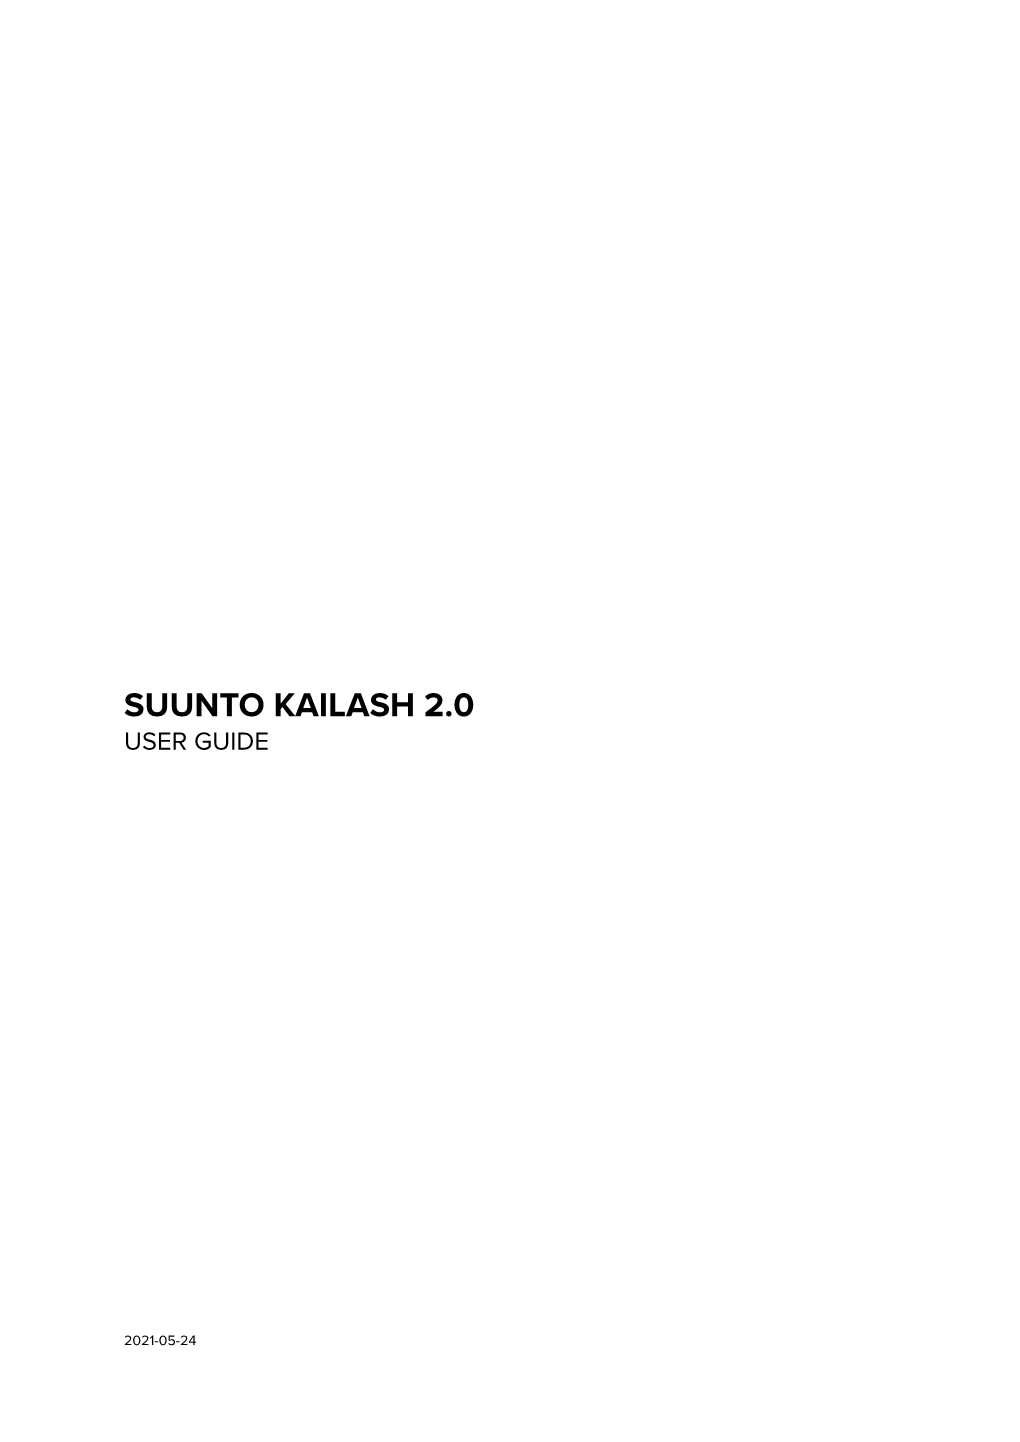 Suunto Kailash 2.0 User Guide